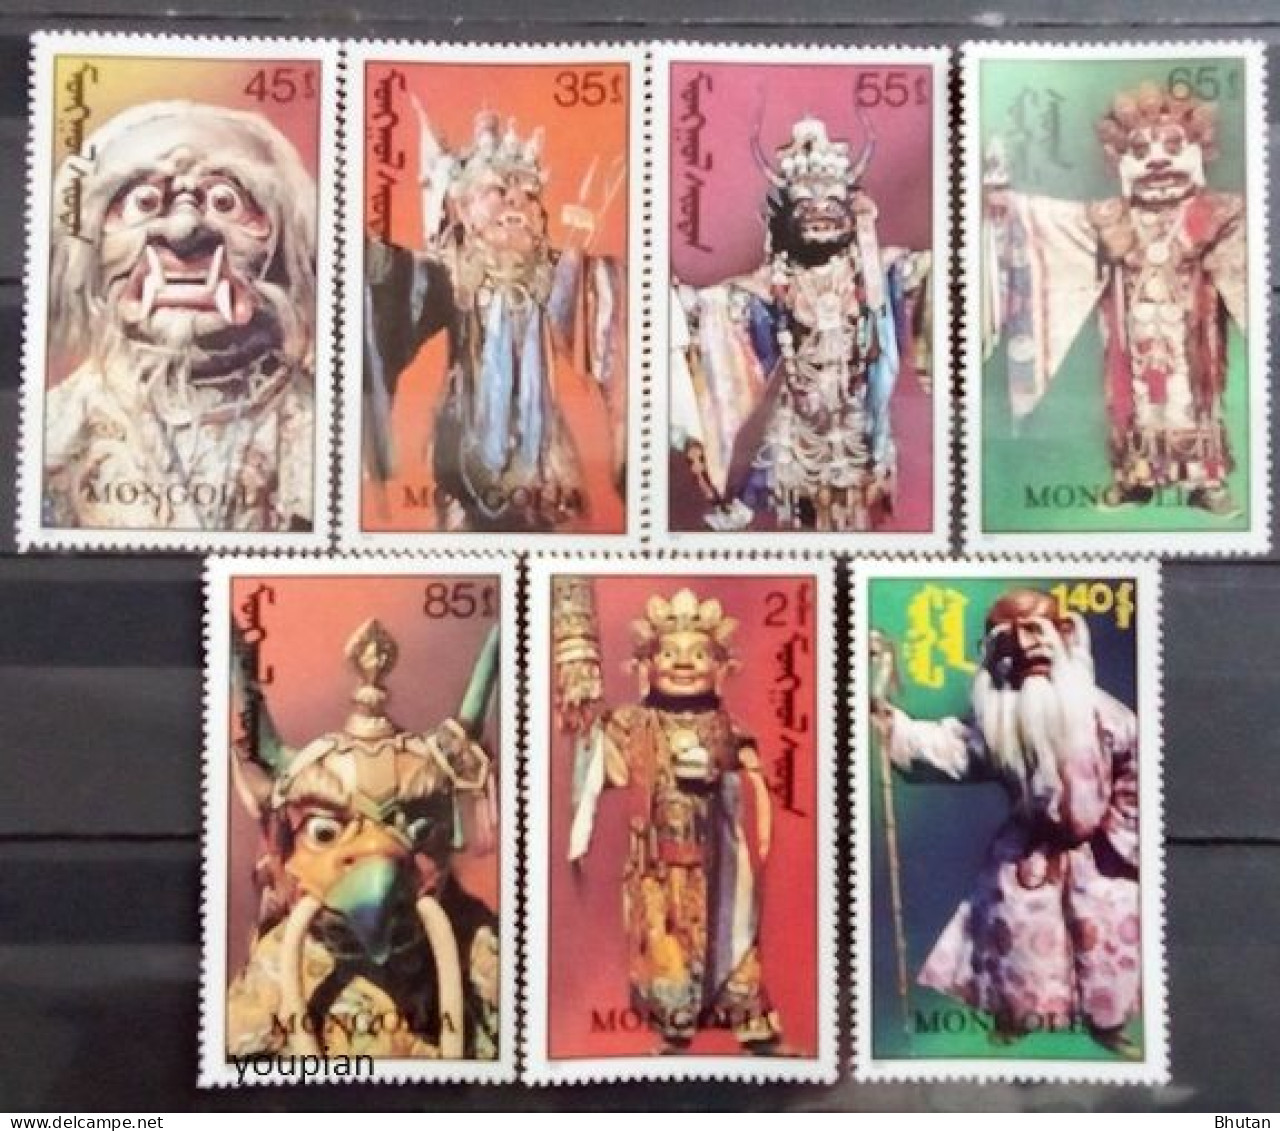 Mongolia 1991, Mongolian Tsam Dance Masks, MNH Stamps Set - Mongolie